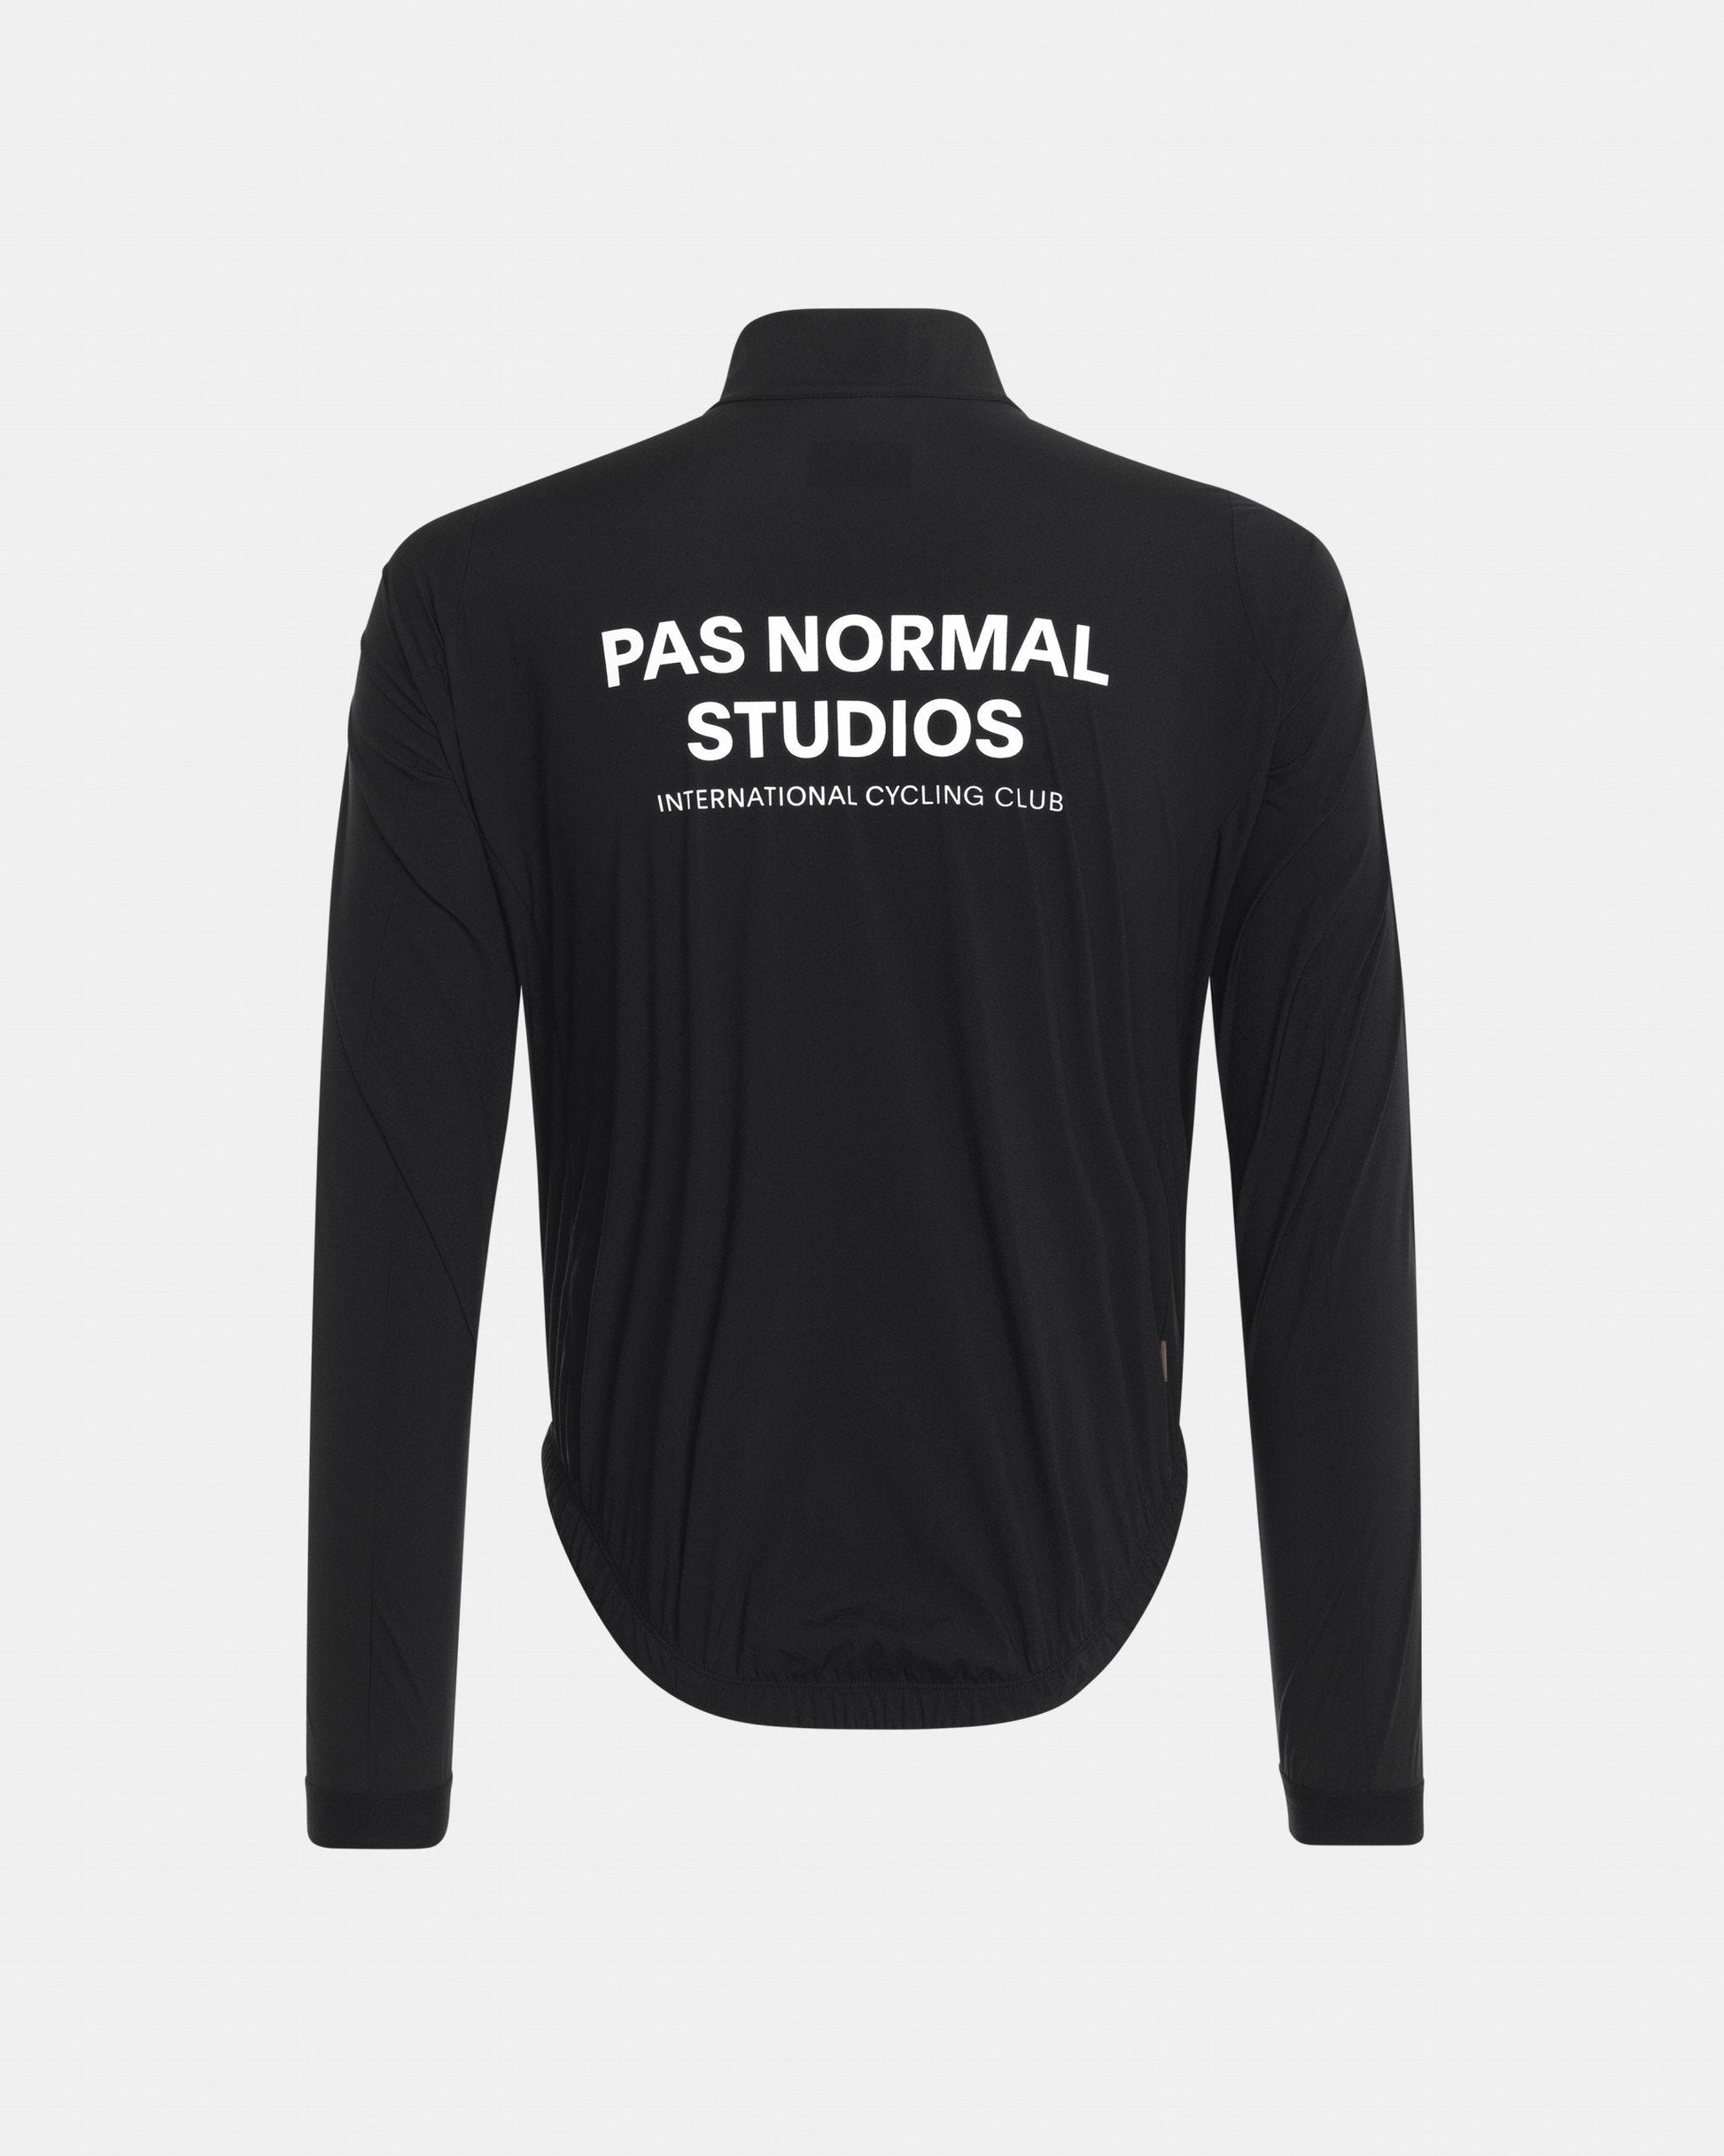 Pas Normal Studios - Manteau Stow Away Homme Manteaux Pas Normal Studios 